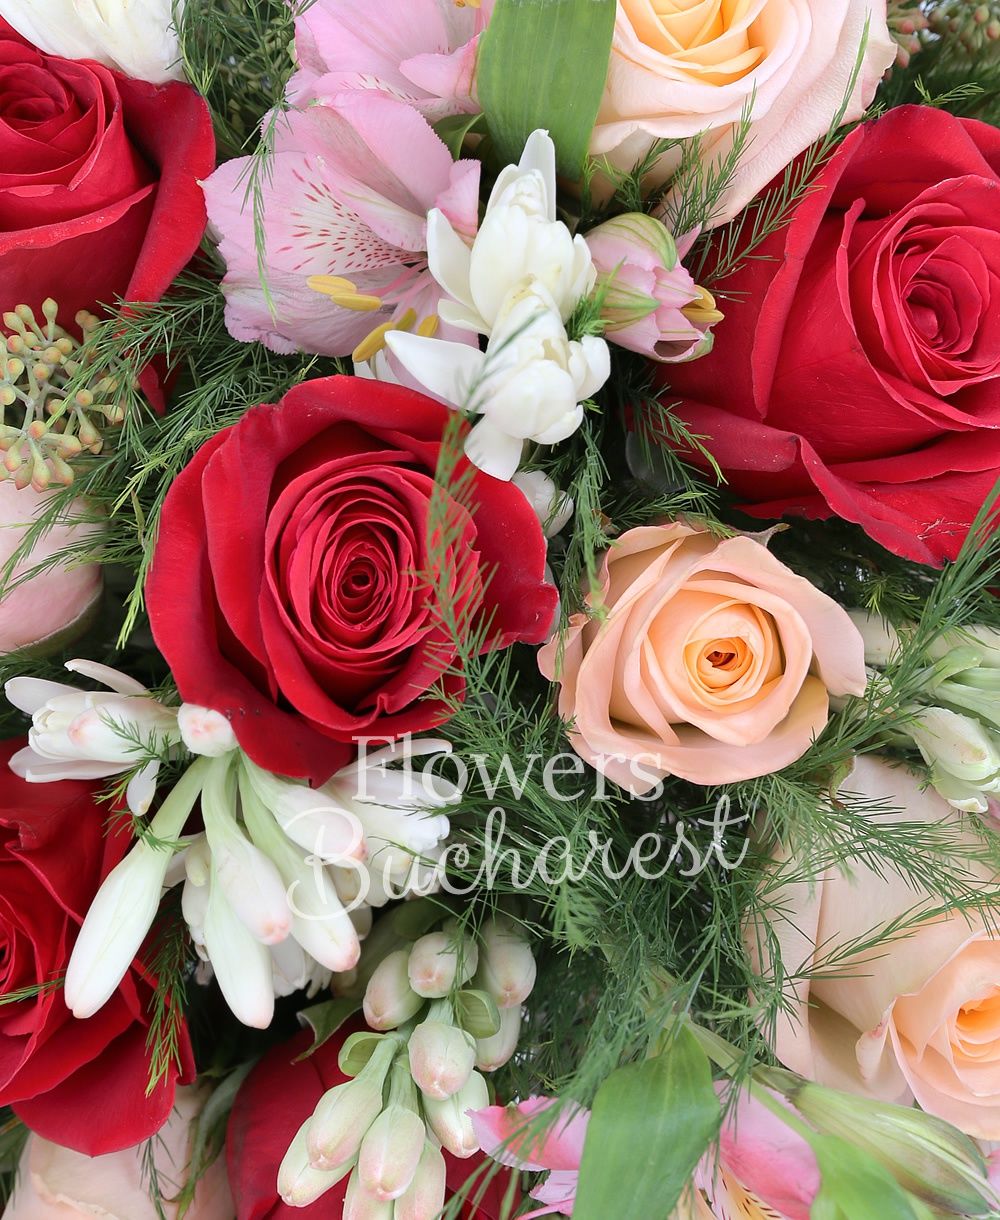 11 cream roses, 12 red roses, 5 pink alstroemeria, 5 white alstroemeria, greenery